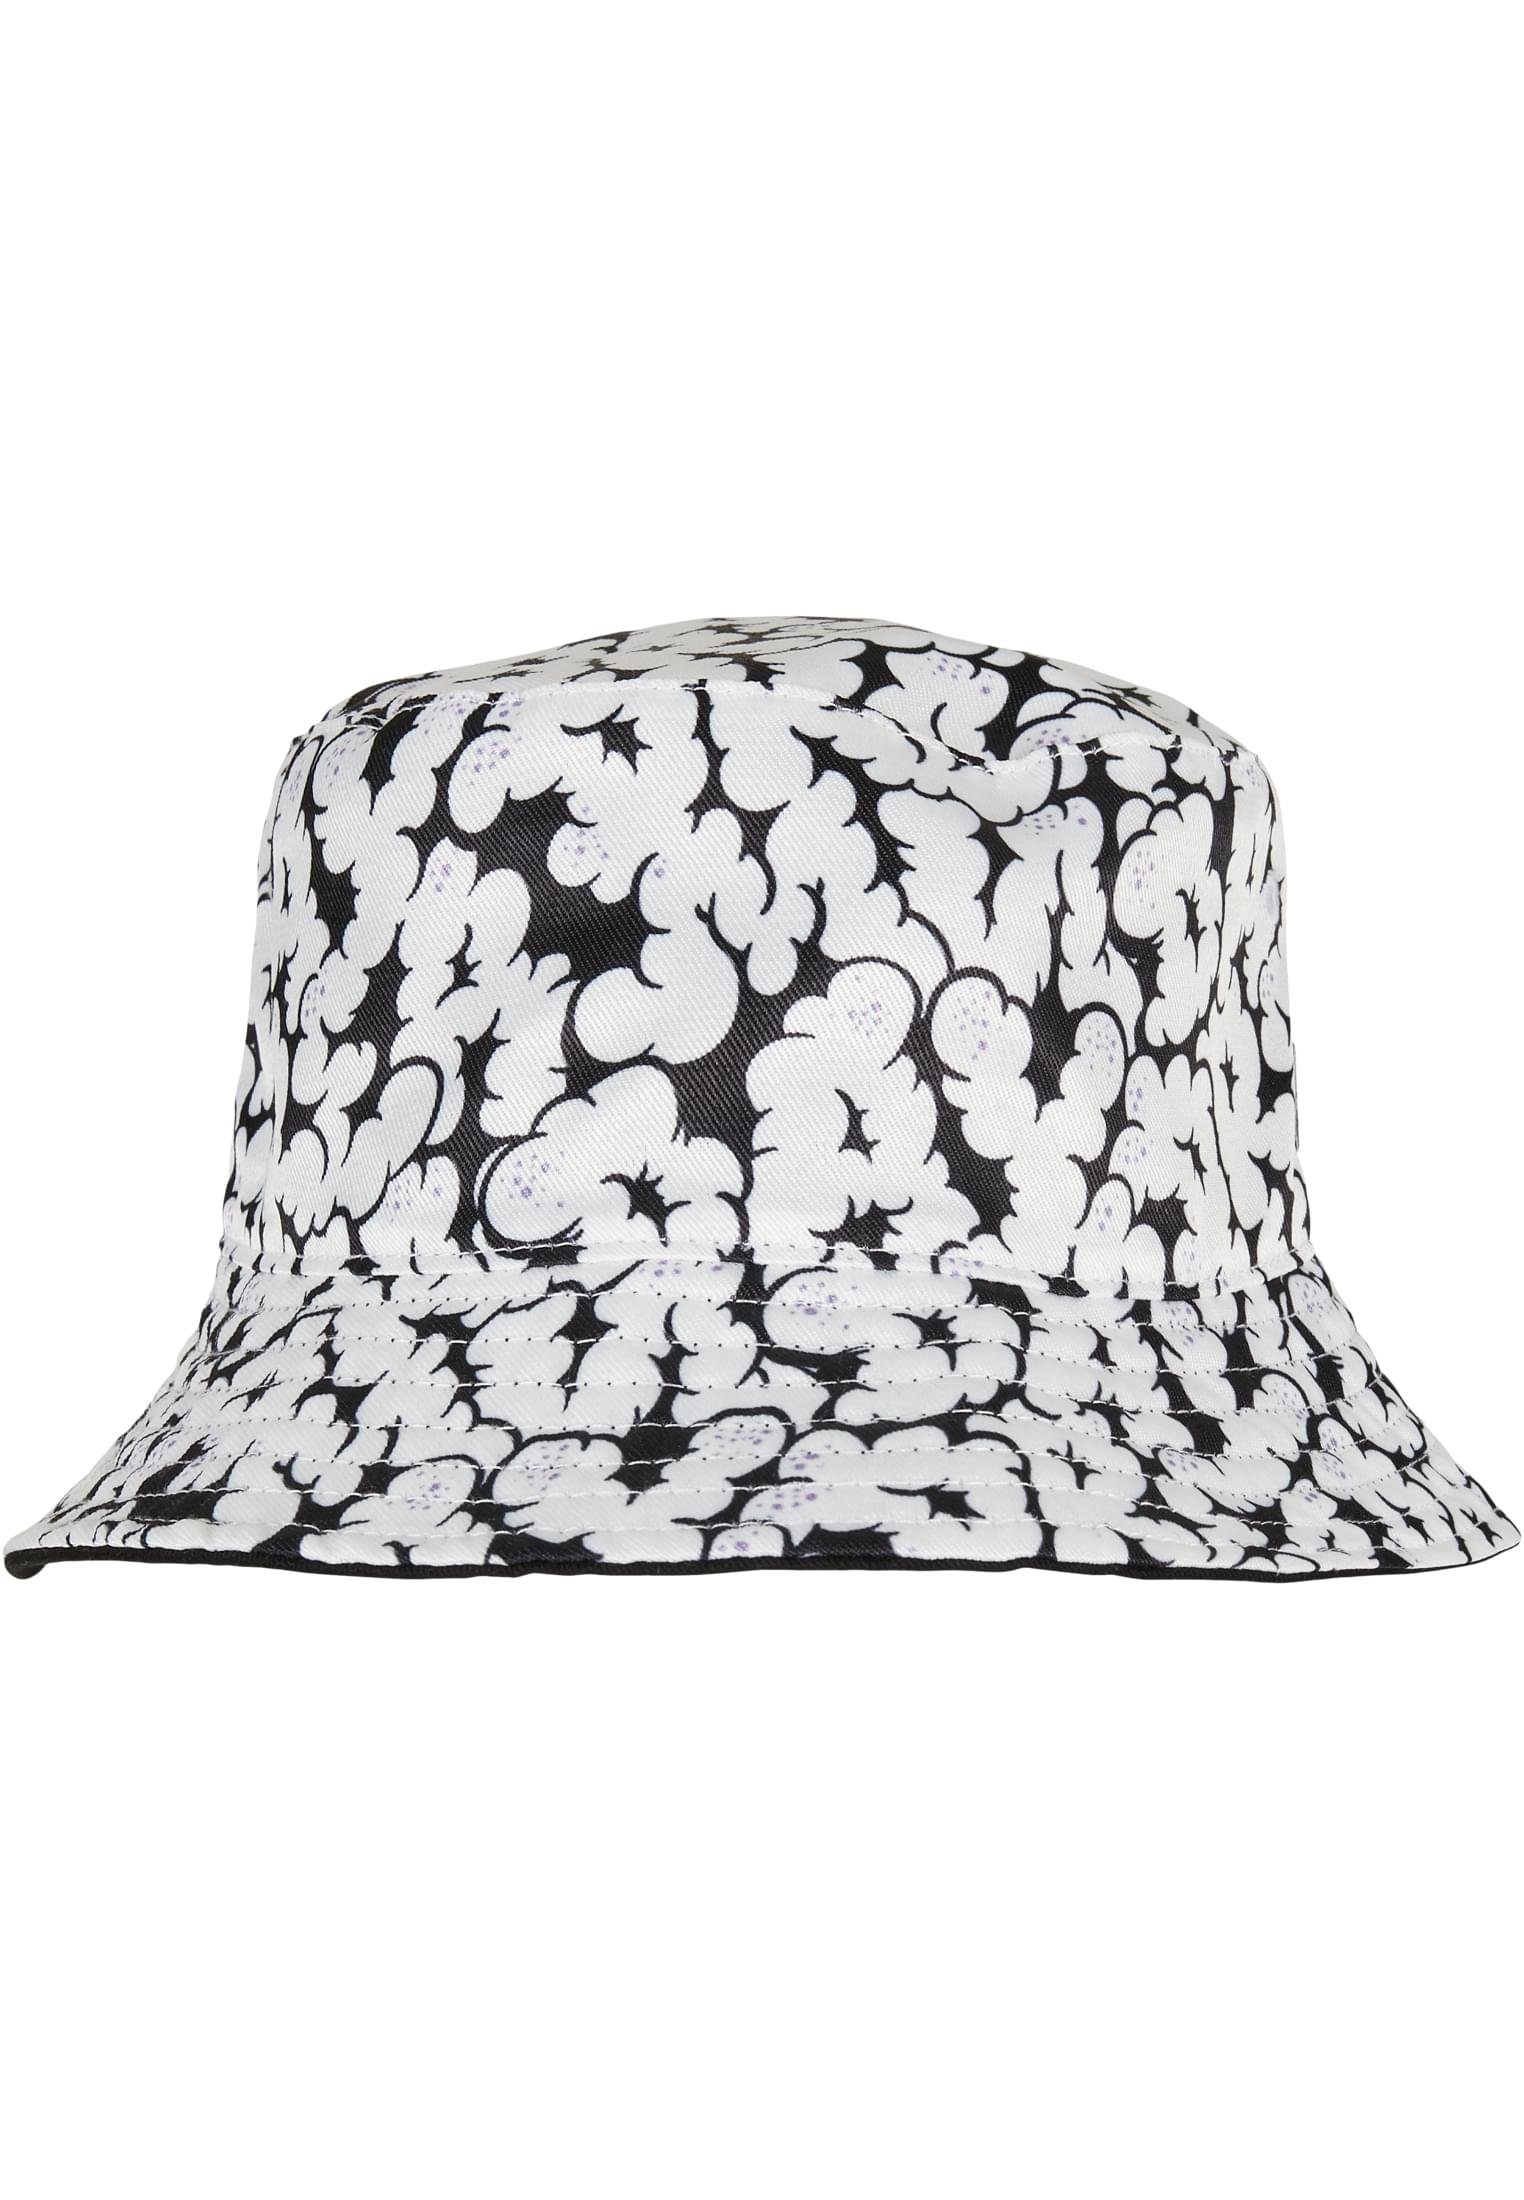 Bucket CAYLER Hat Accessoires SONS Day Flex Reversible Cap & Dreamin